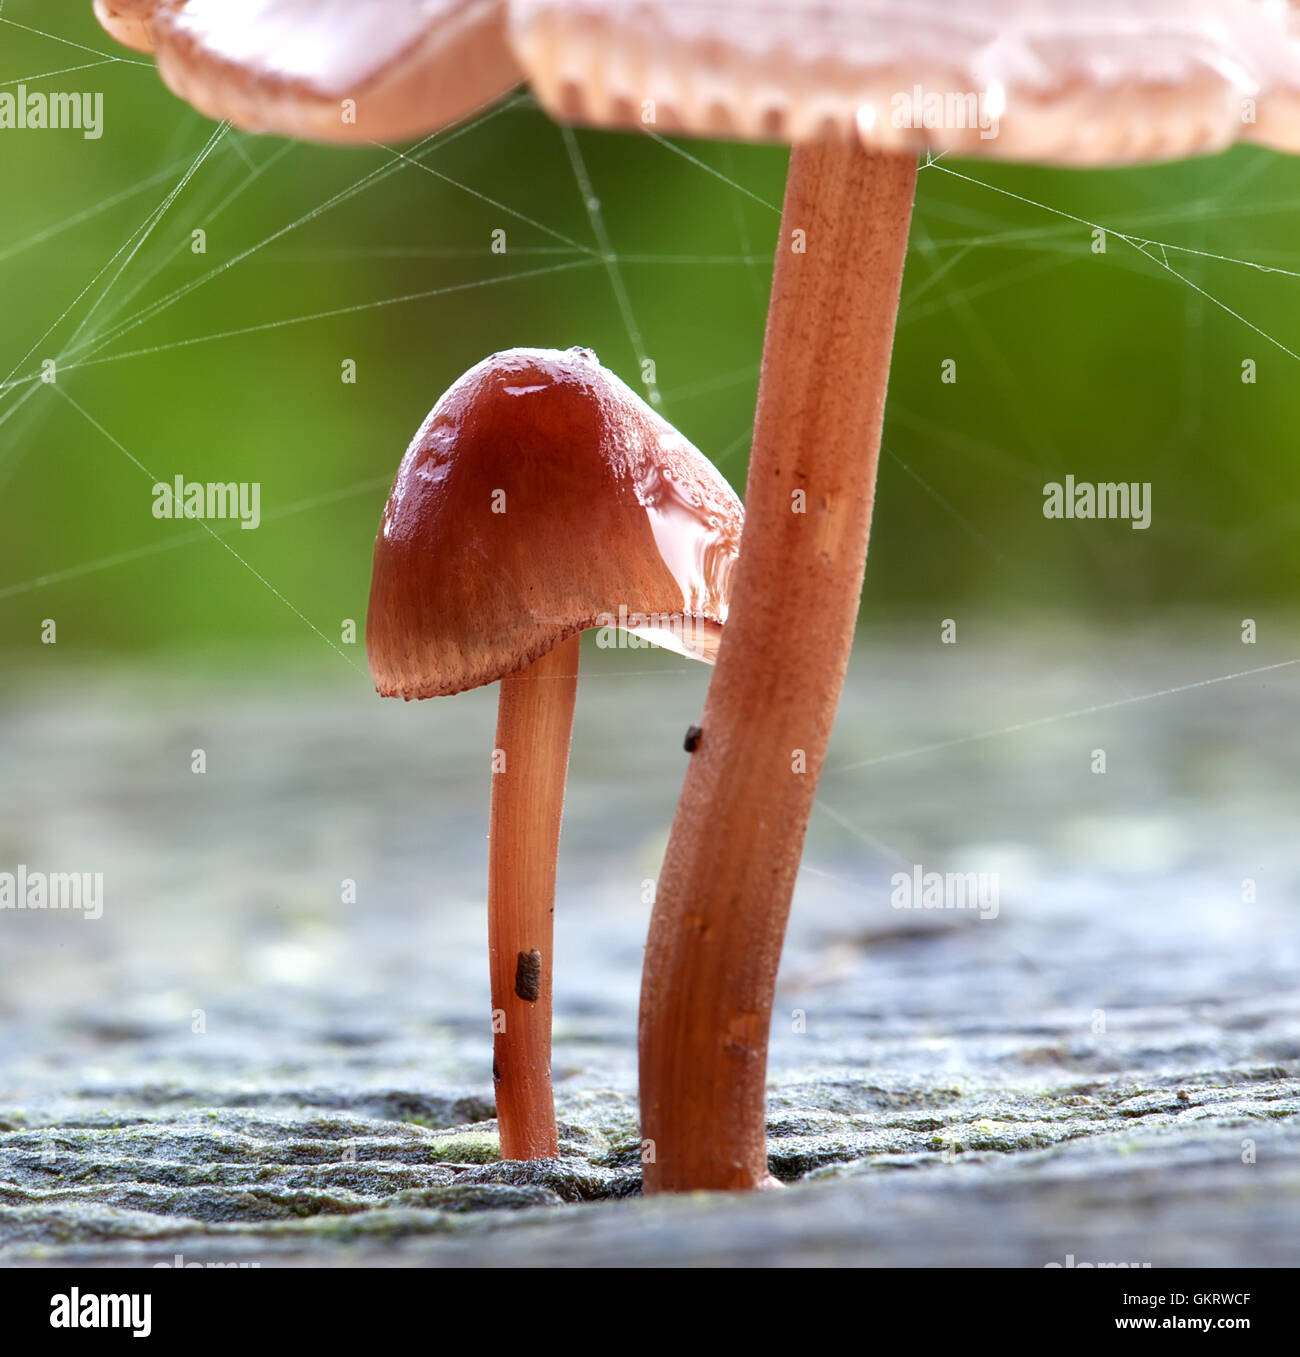 Baby mushroom growing under large mushroom Stock Photo